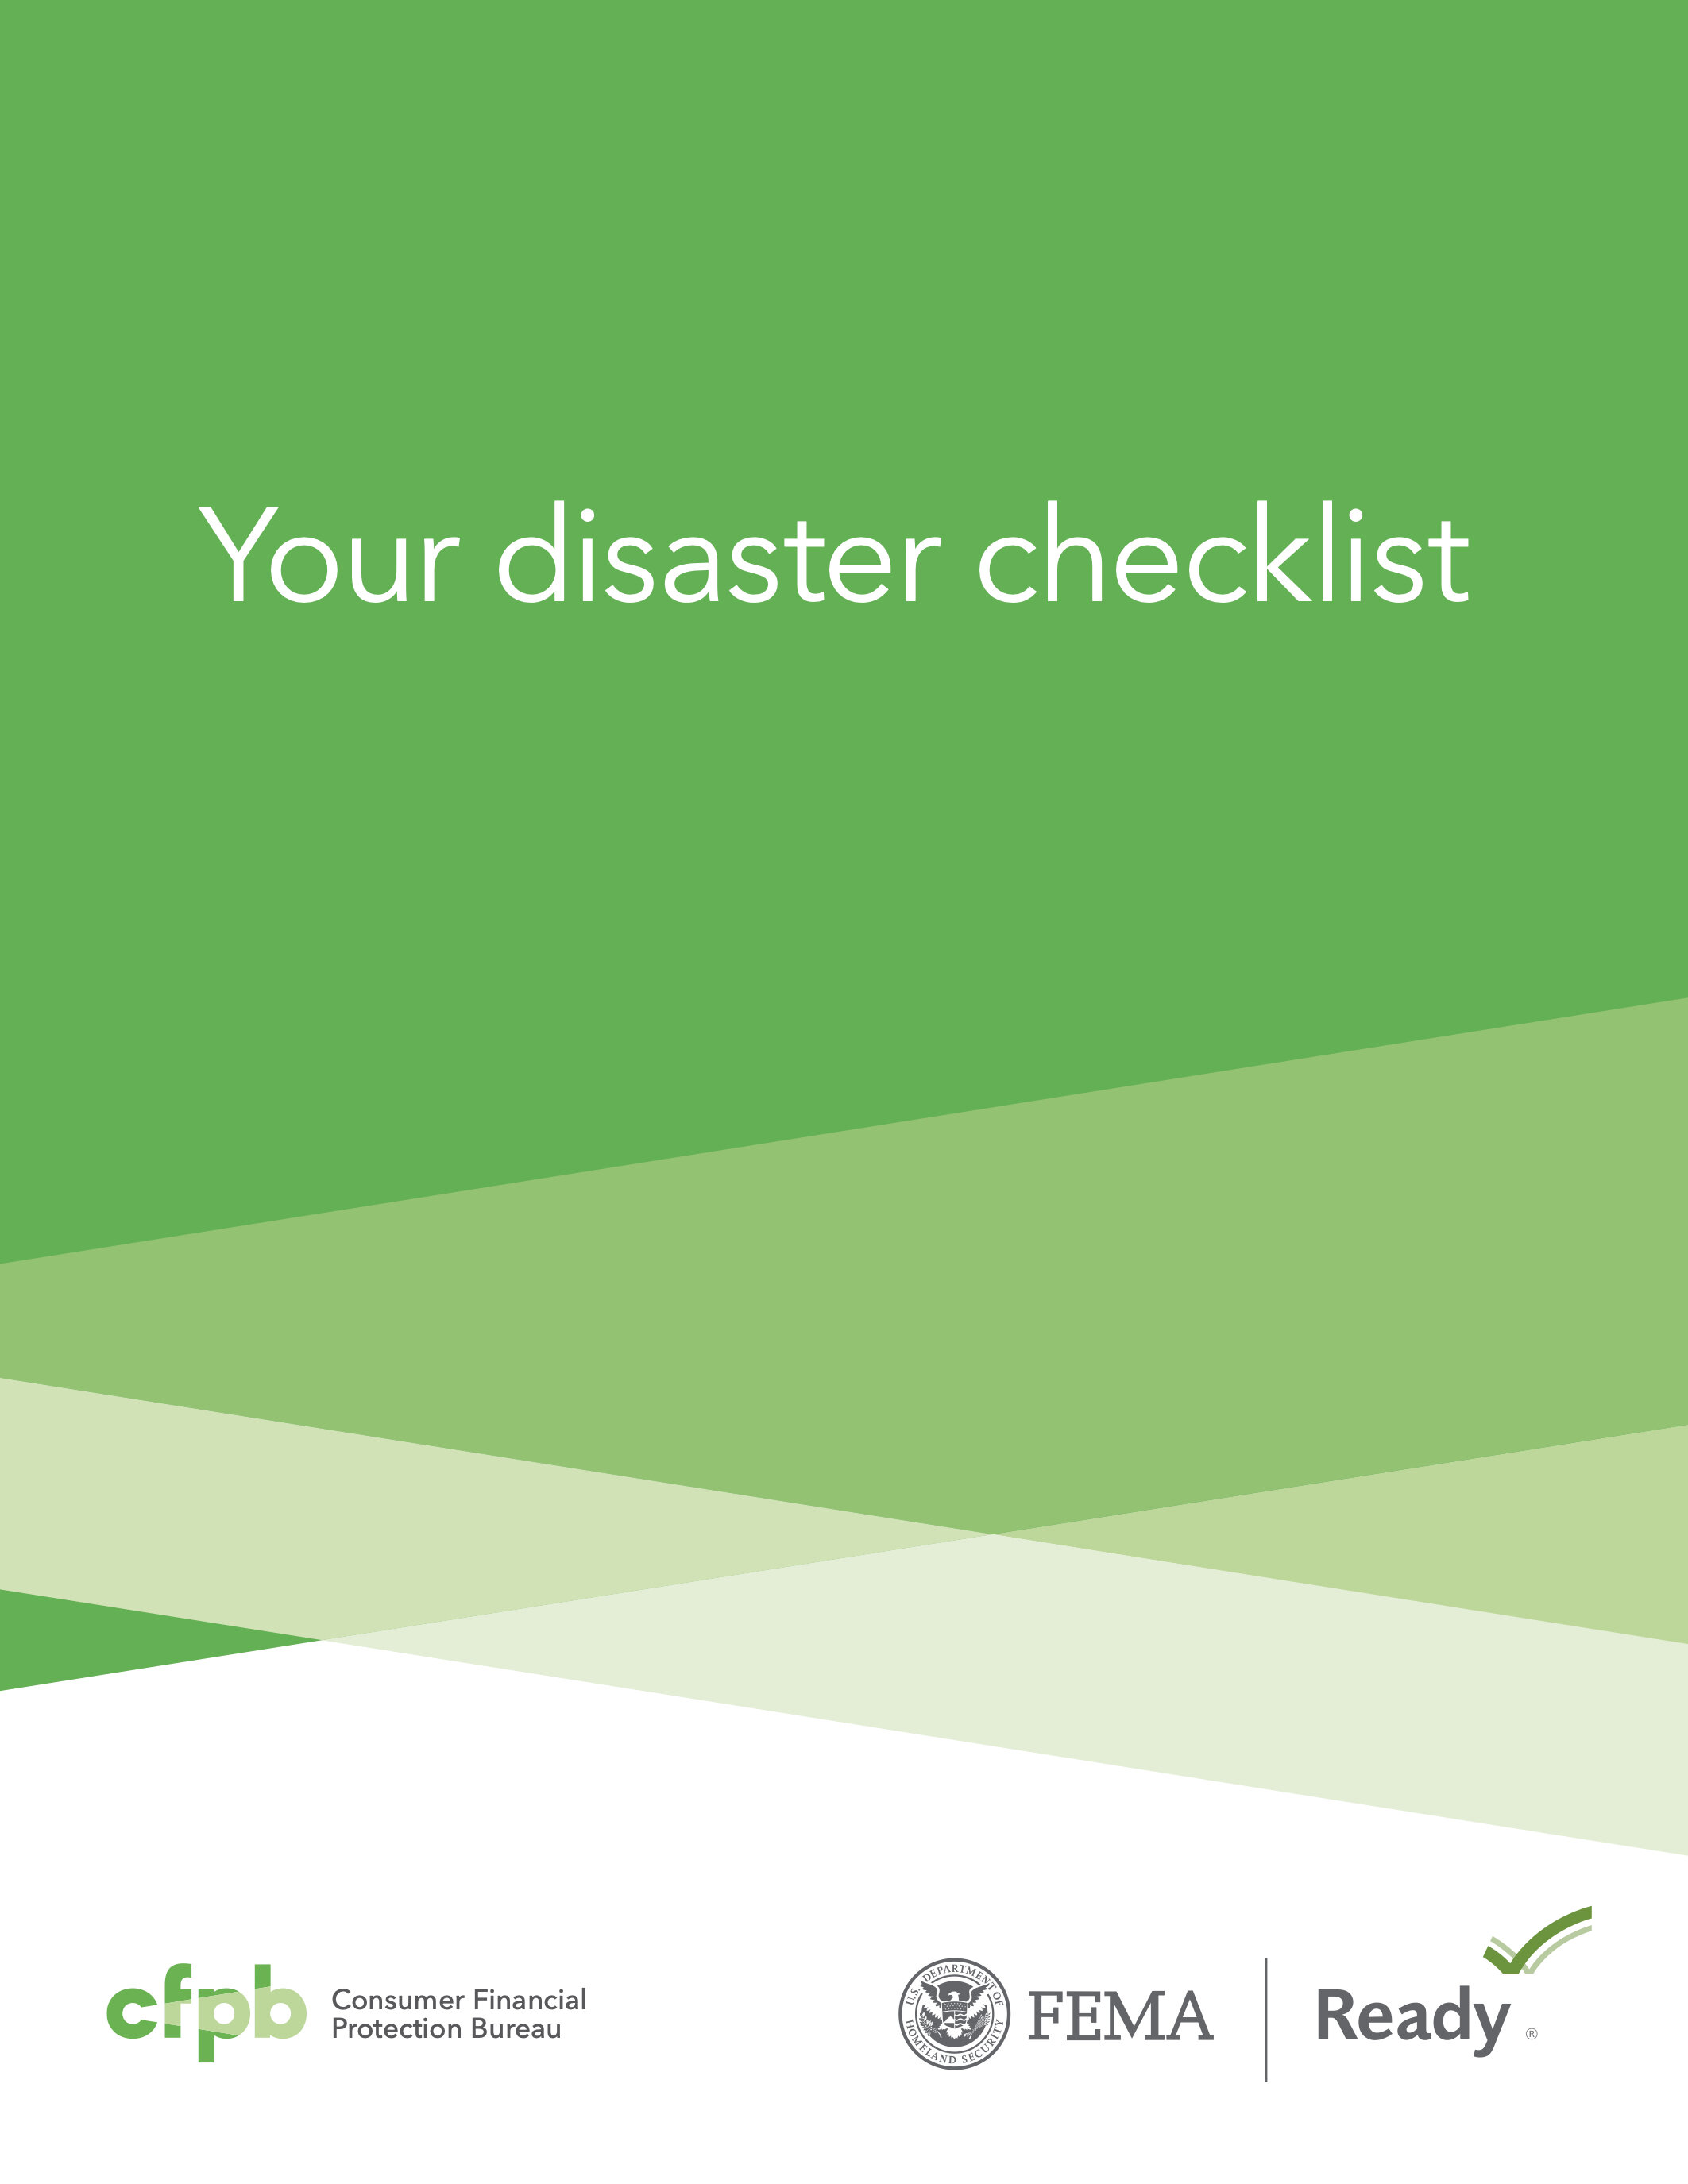 FEMA Disaster Checklist.jpg